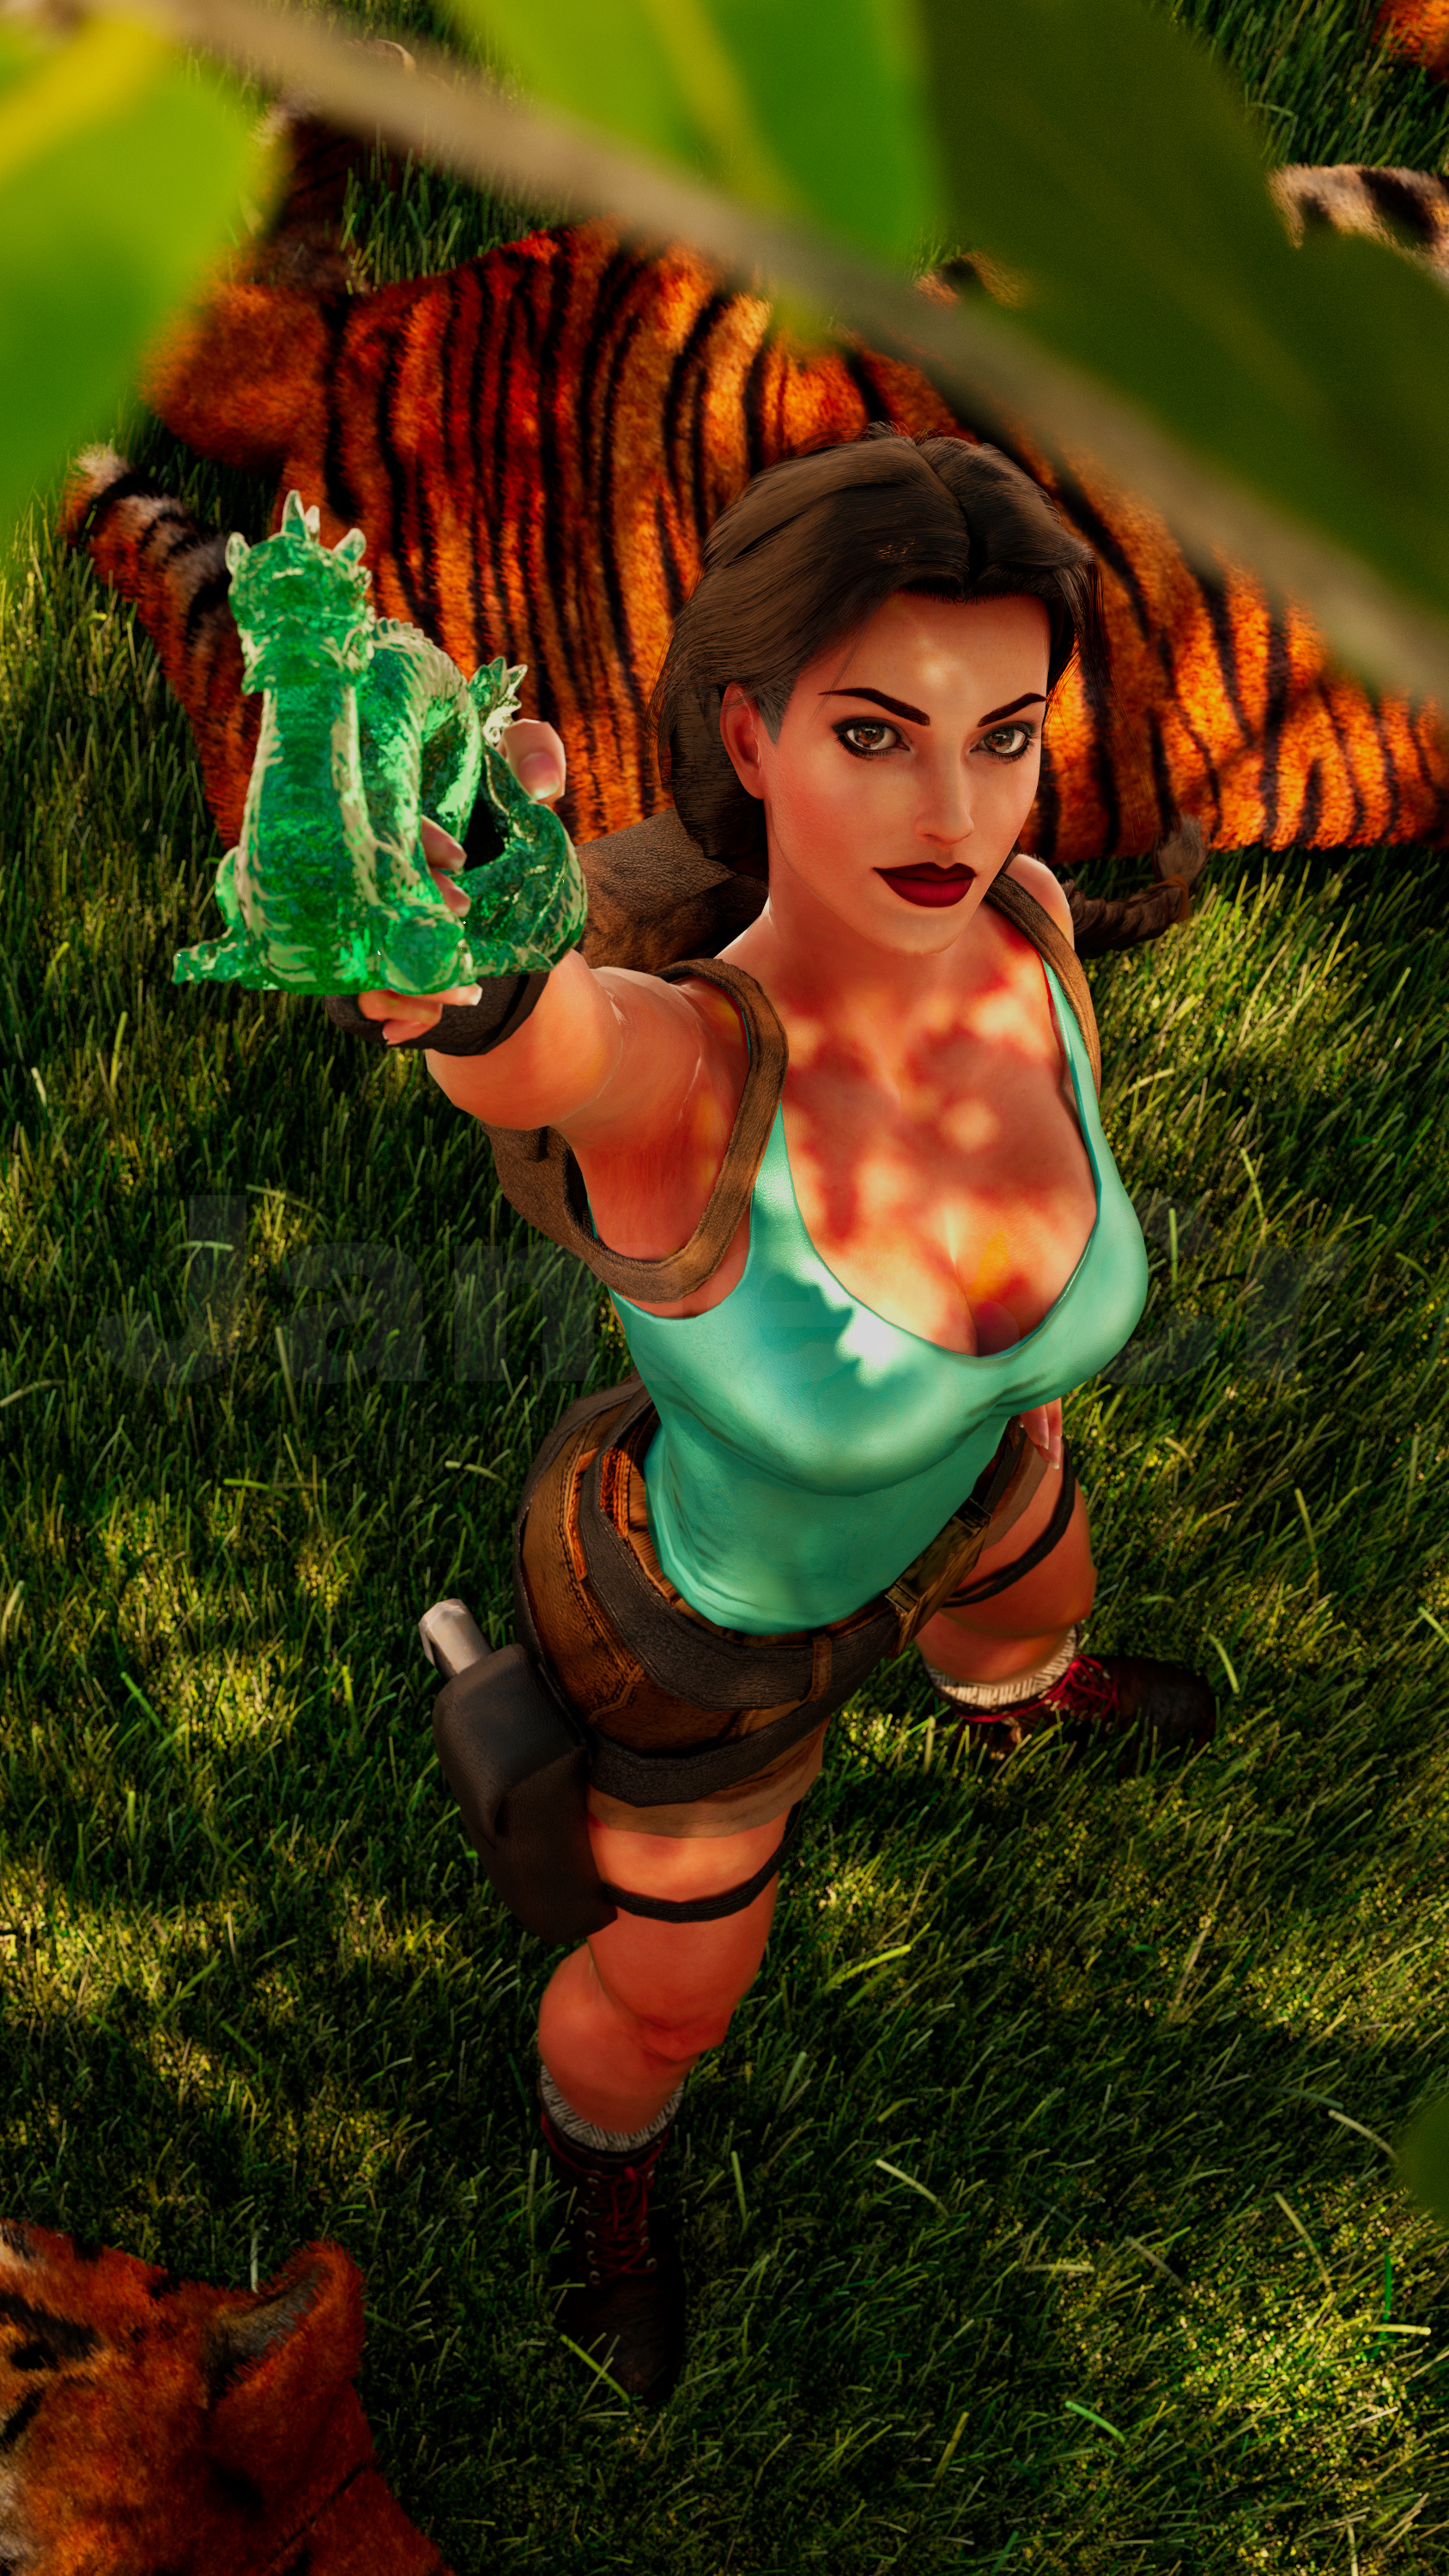 Lara Croft - Call of Duty by DudeKyleArt on DeviantArt